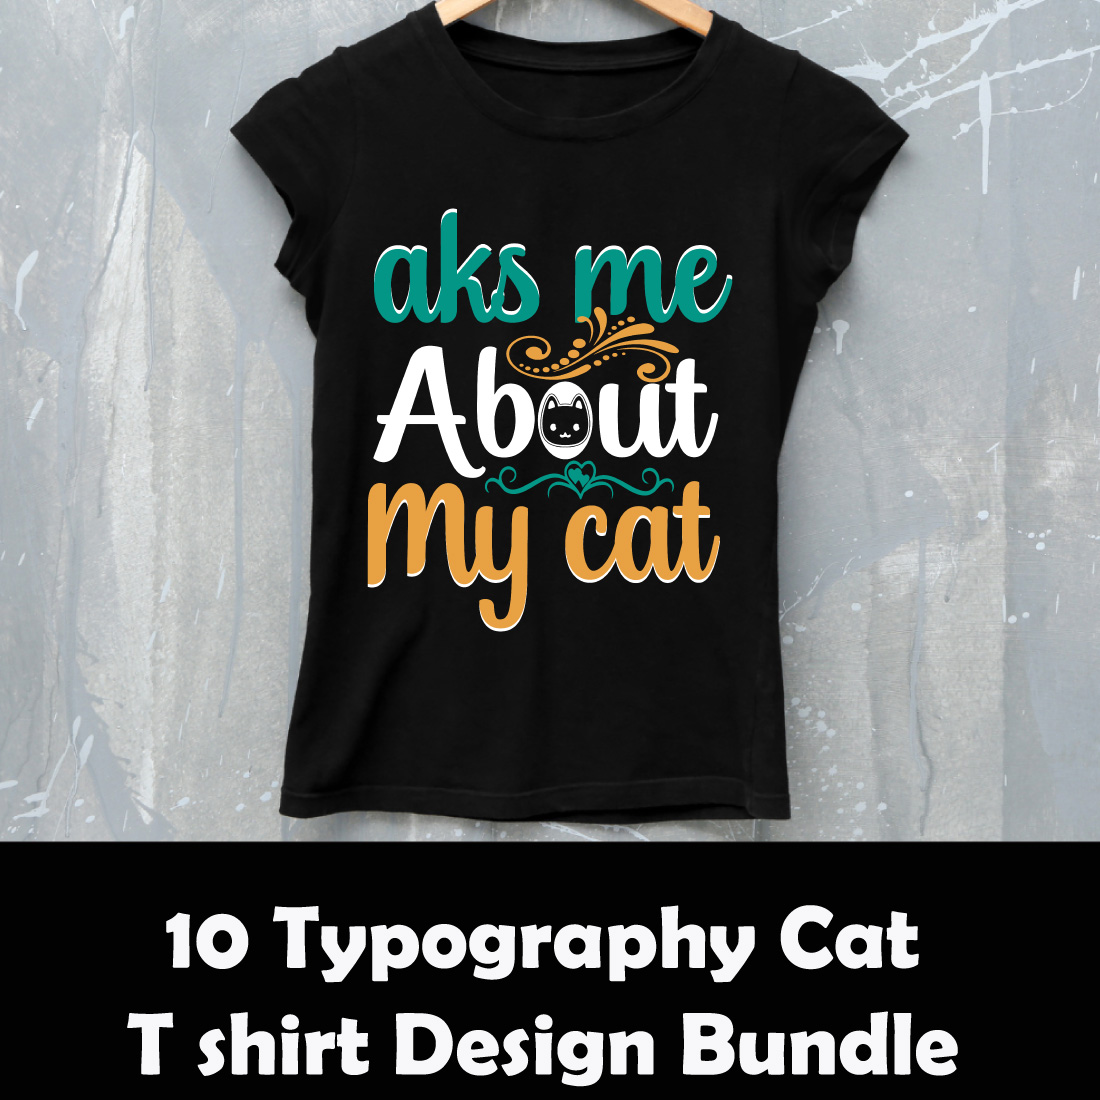 T-shirt Cat Quotes Design cover image.